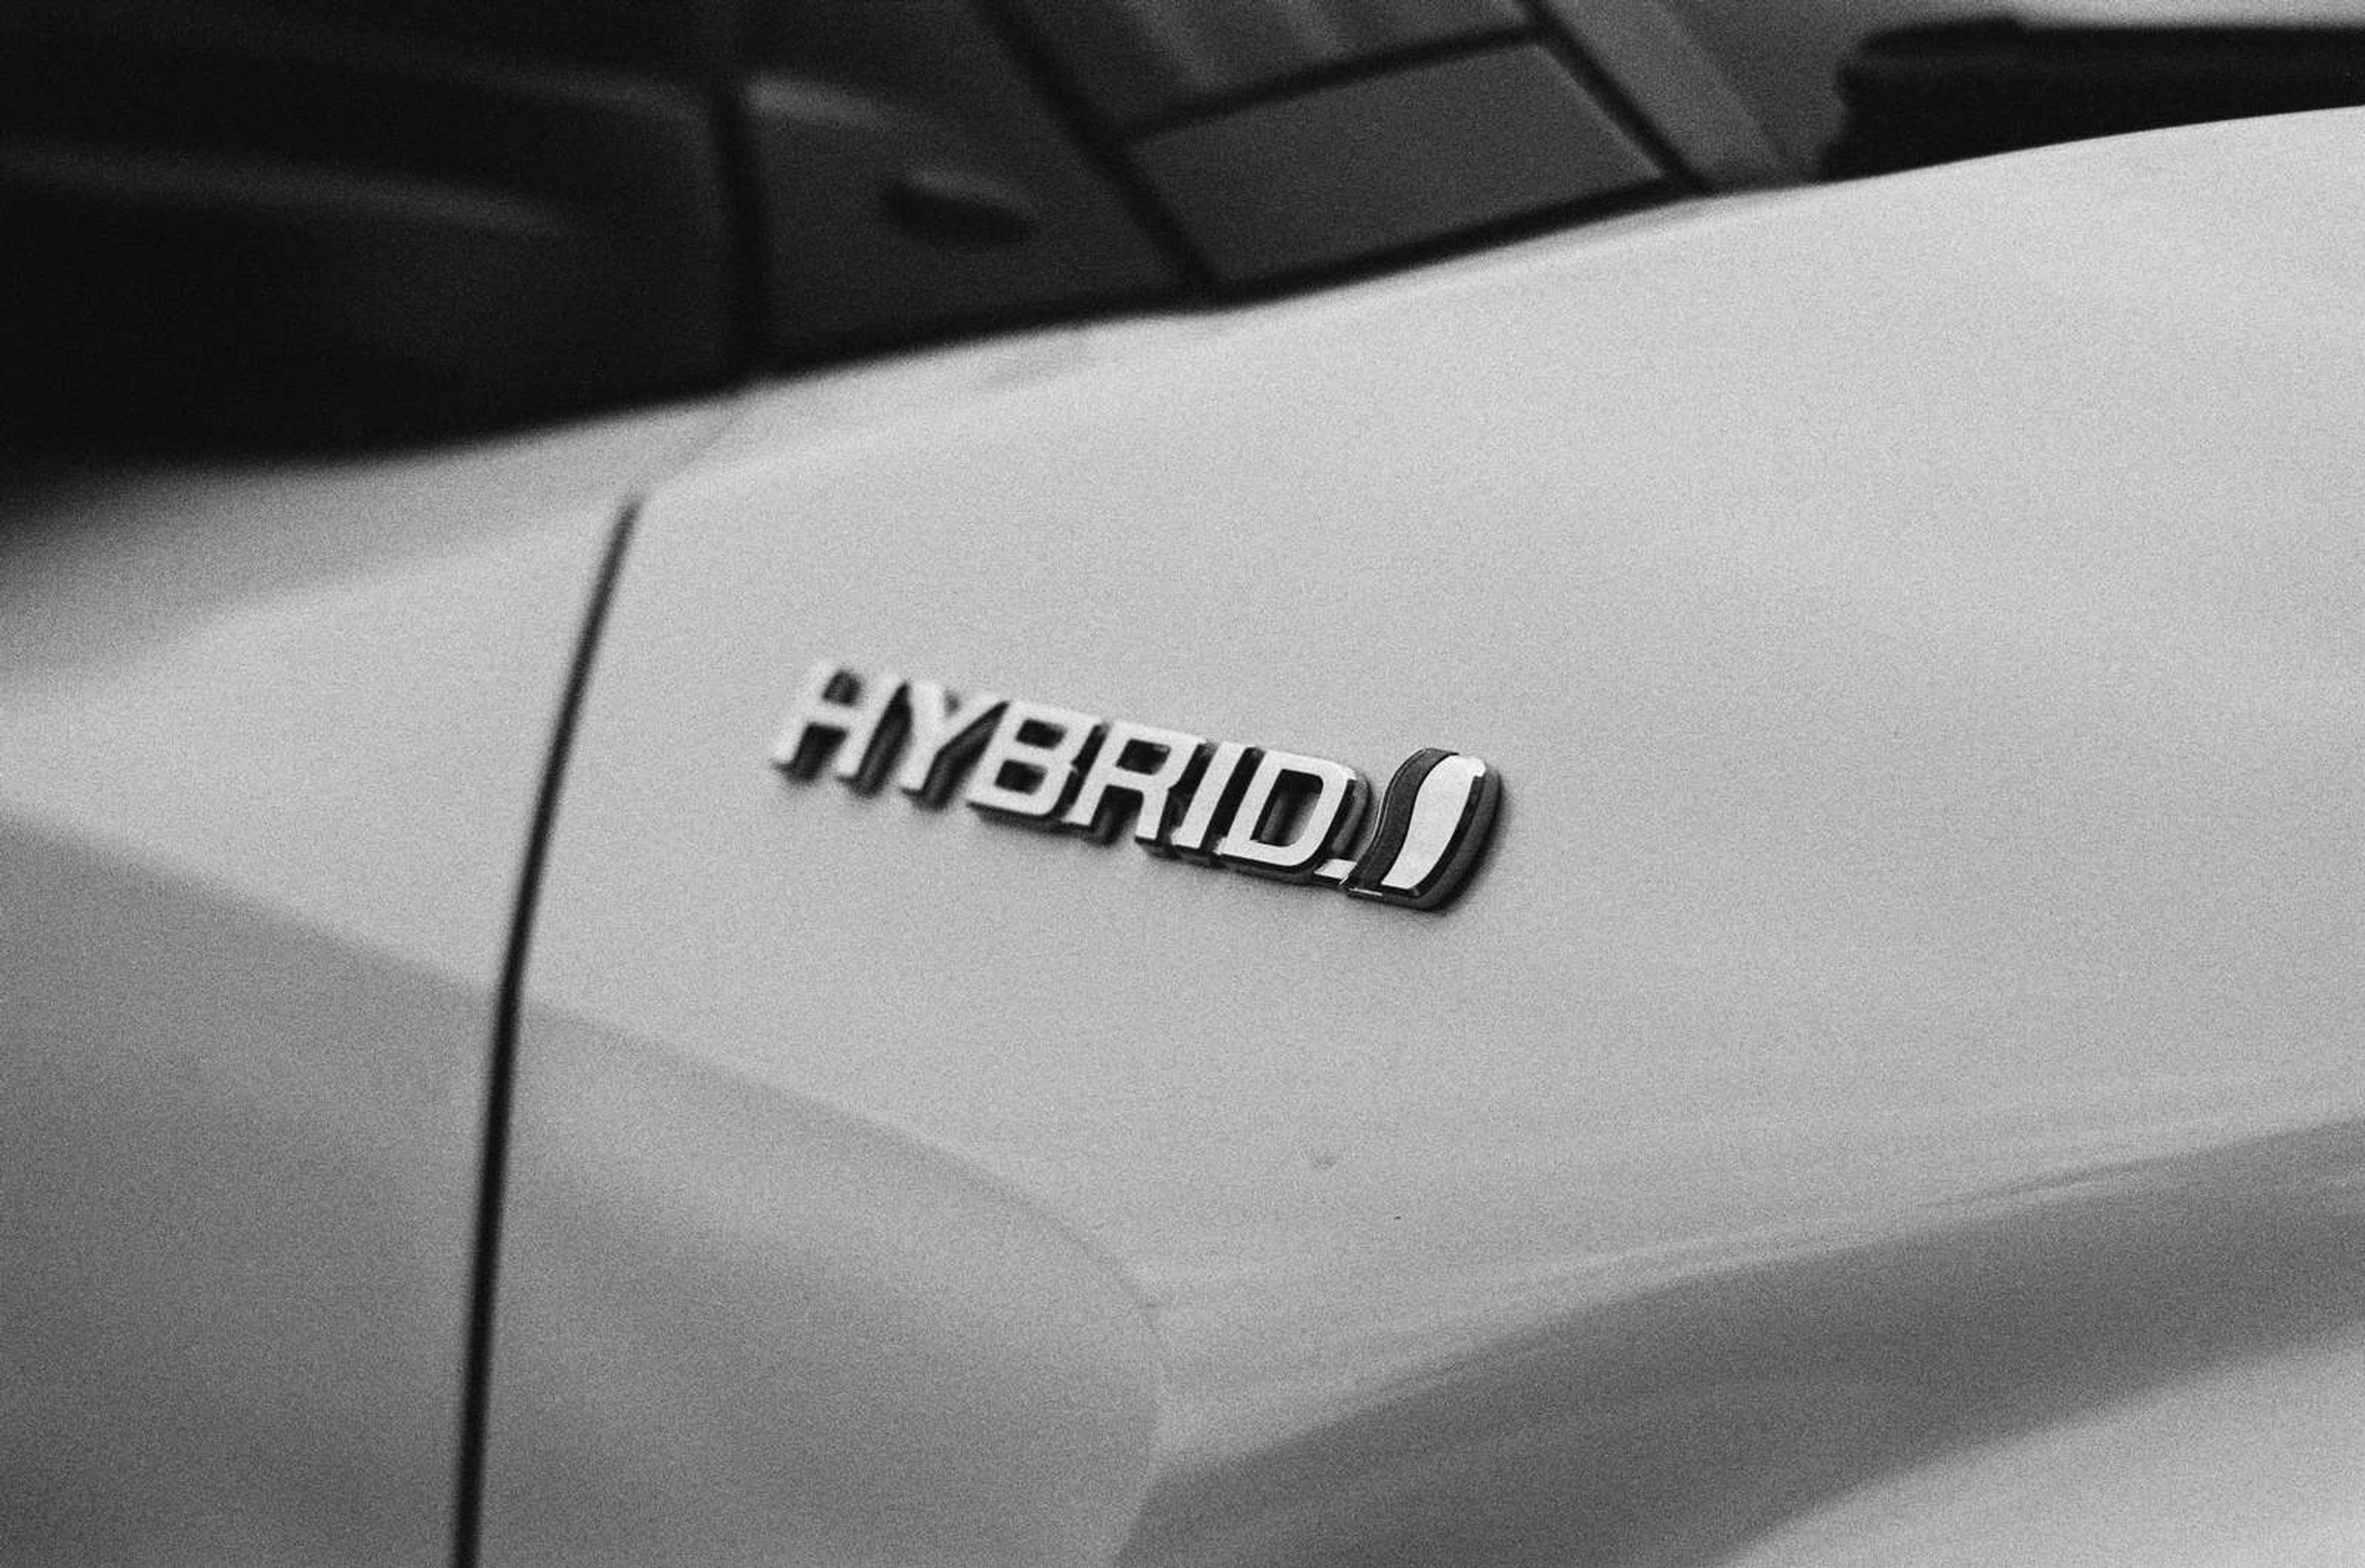 Hybrid vehicle